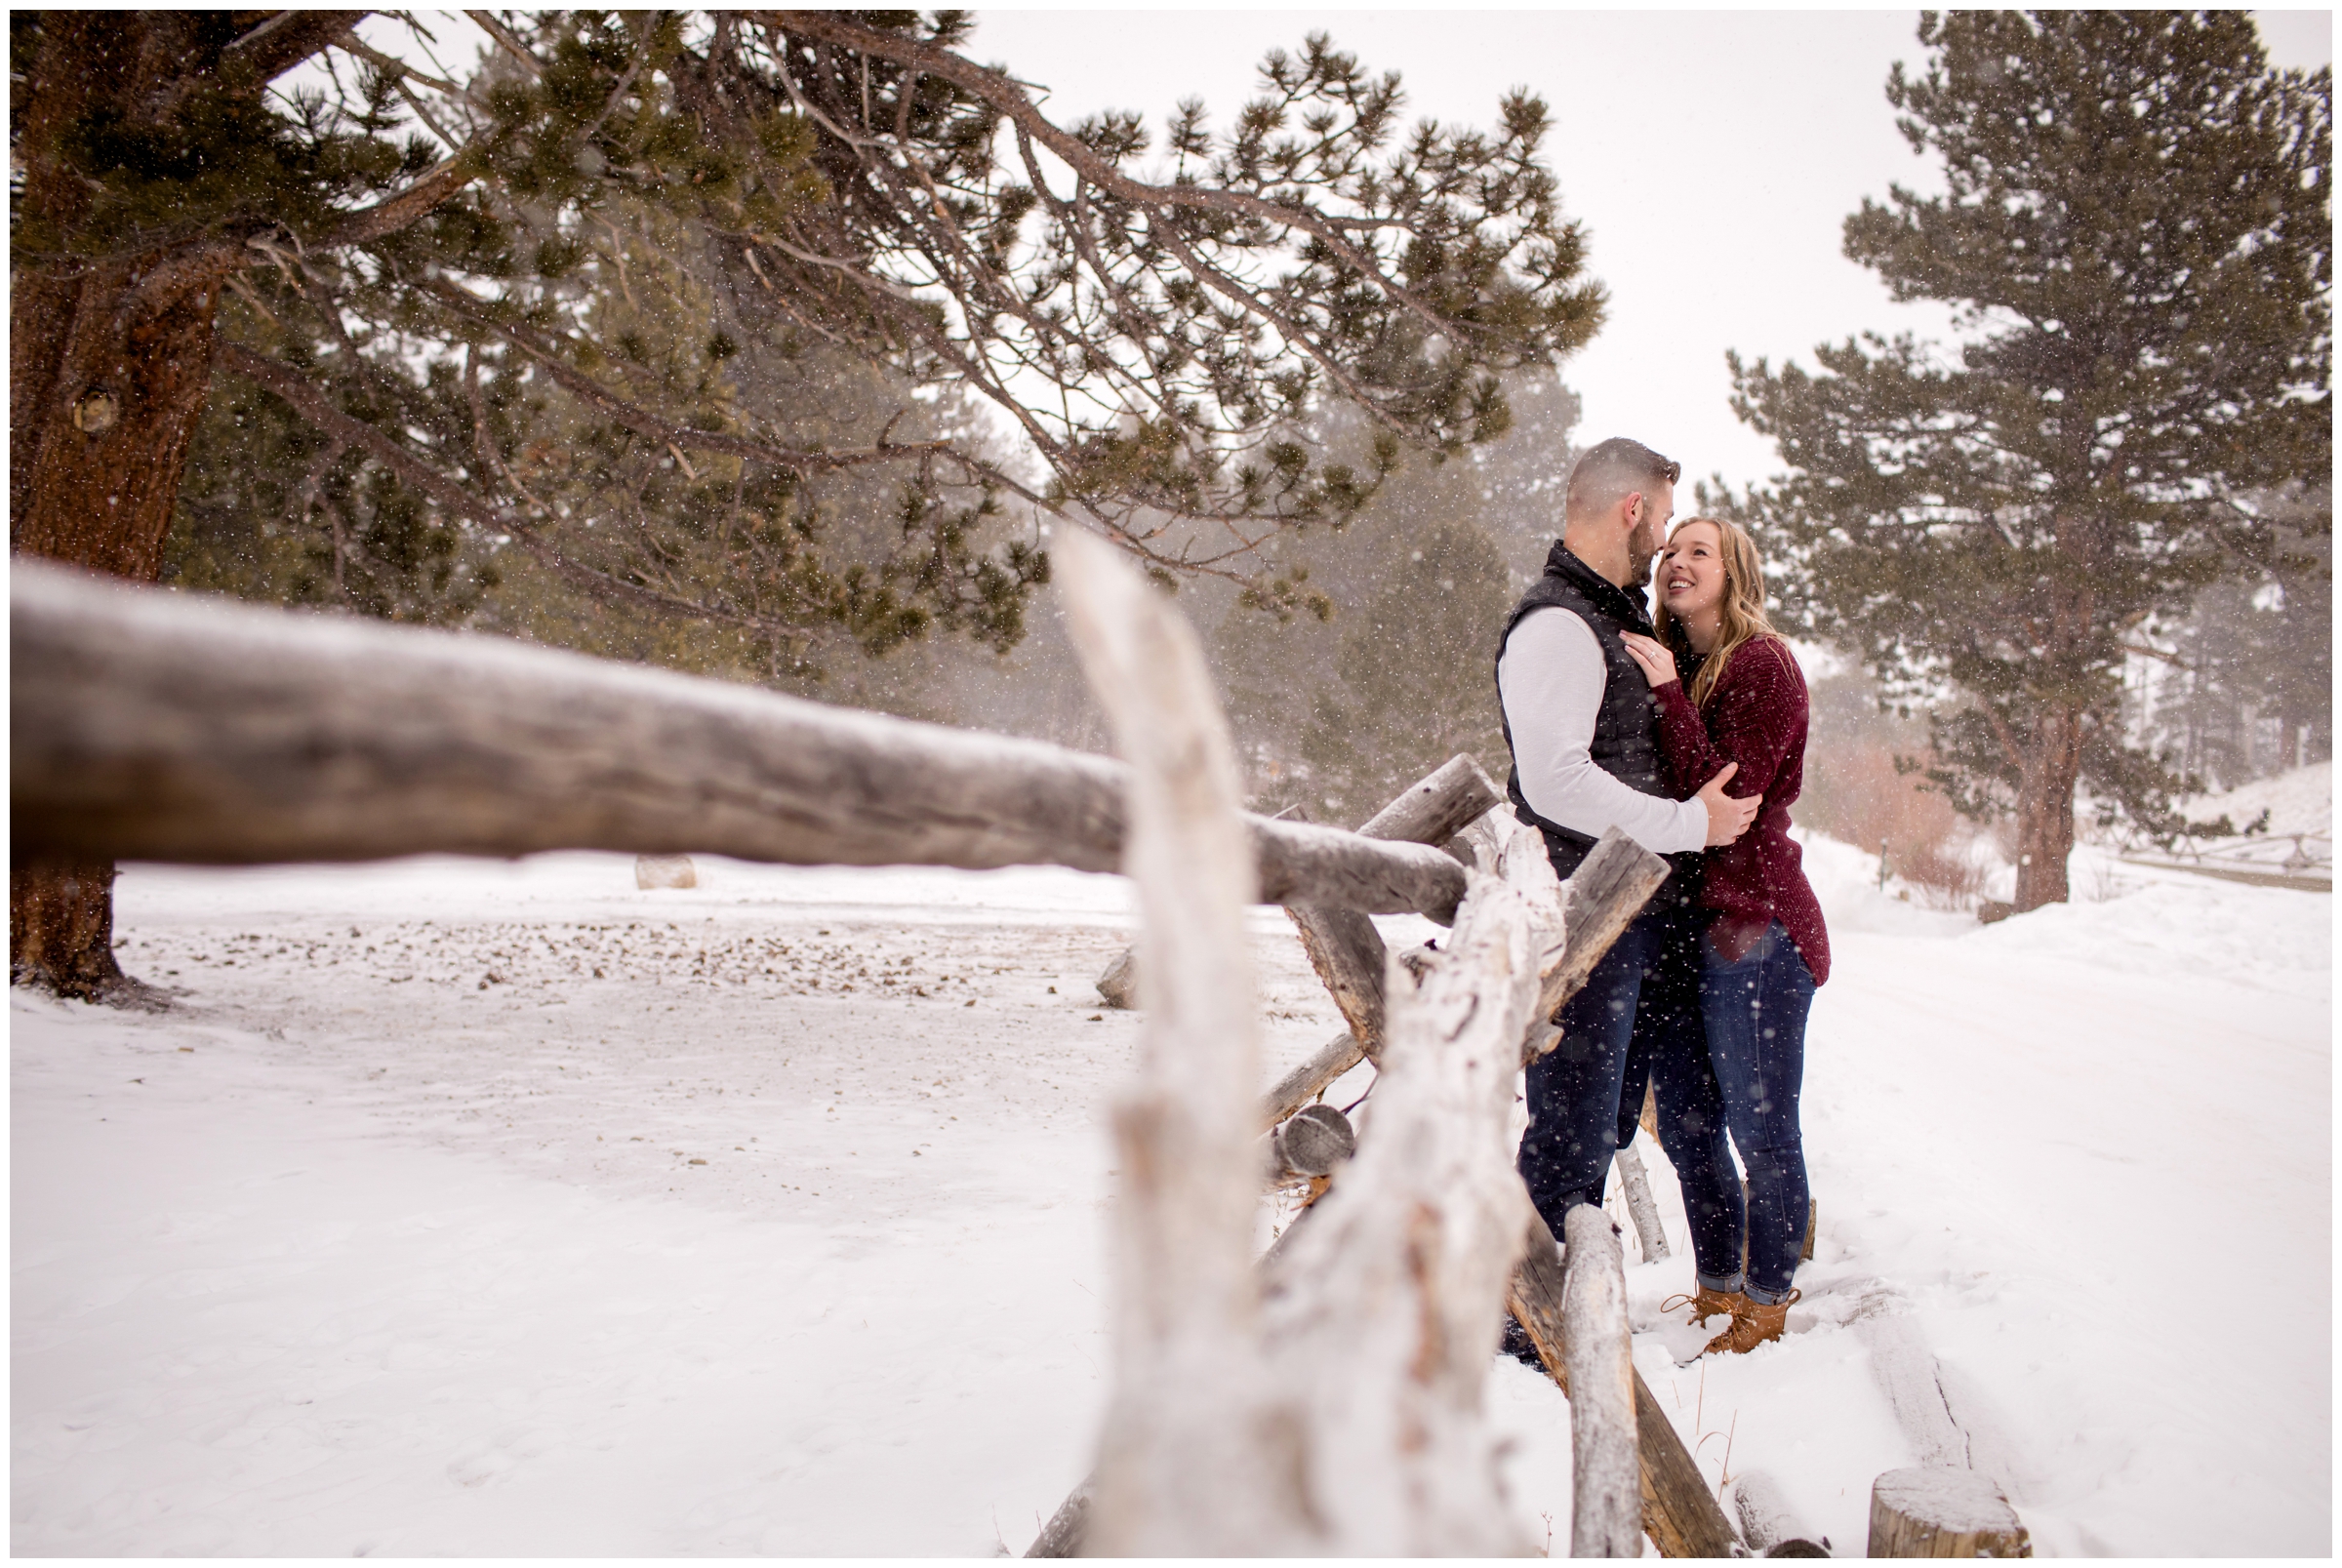 Snowy RMNP winter engagement photos at Sprague Lake and Bear Lake by Colorado wedding photographer Plum Pretty Photography